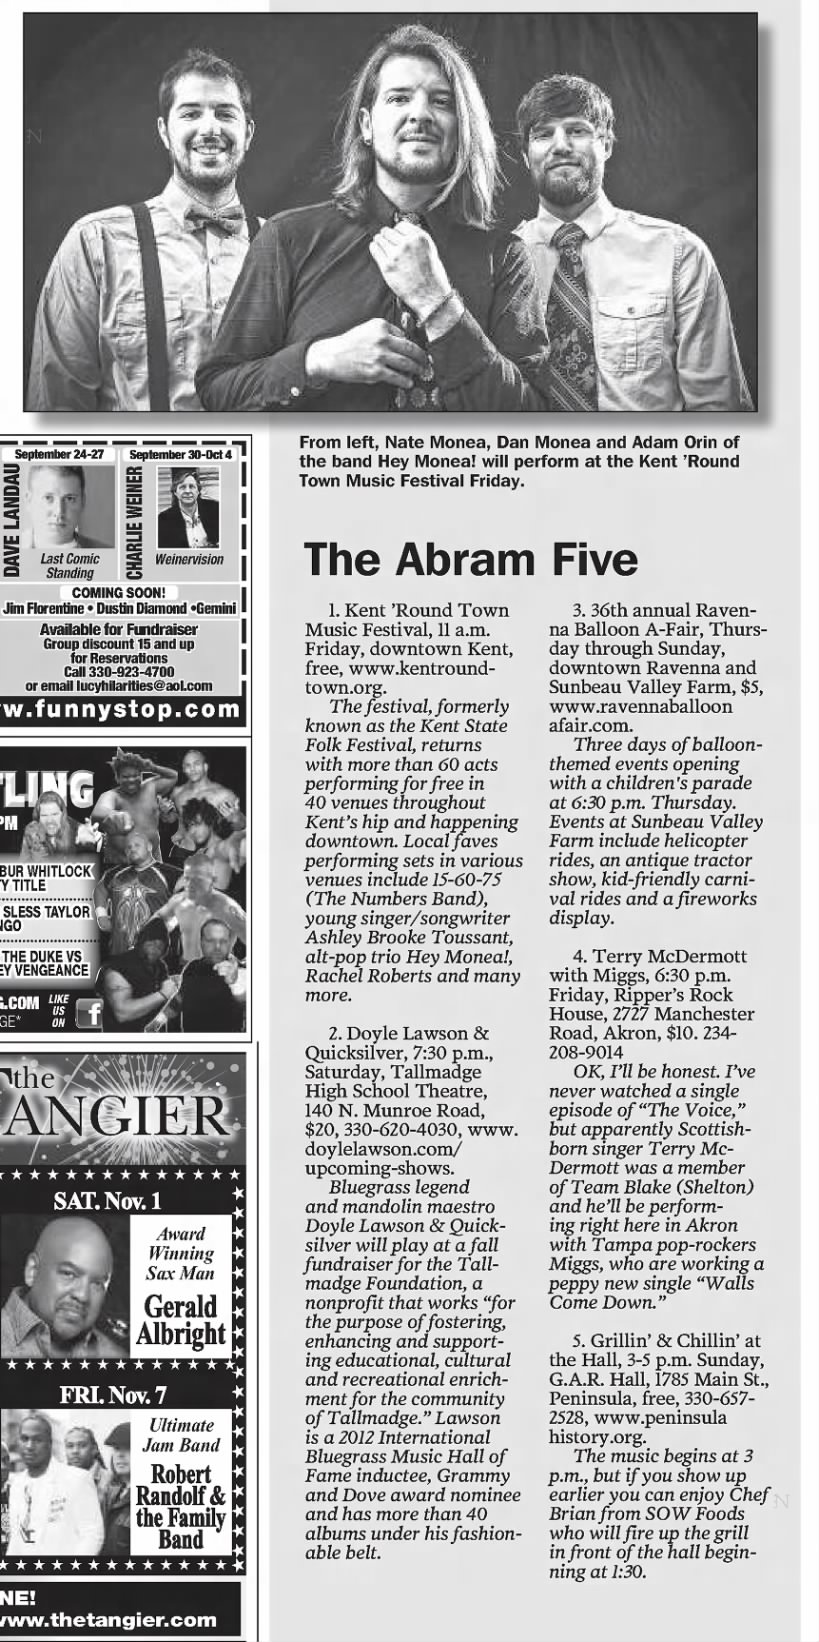 The Abram Five